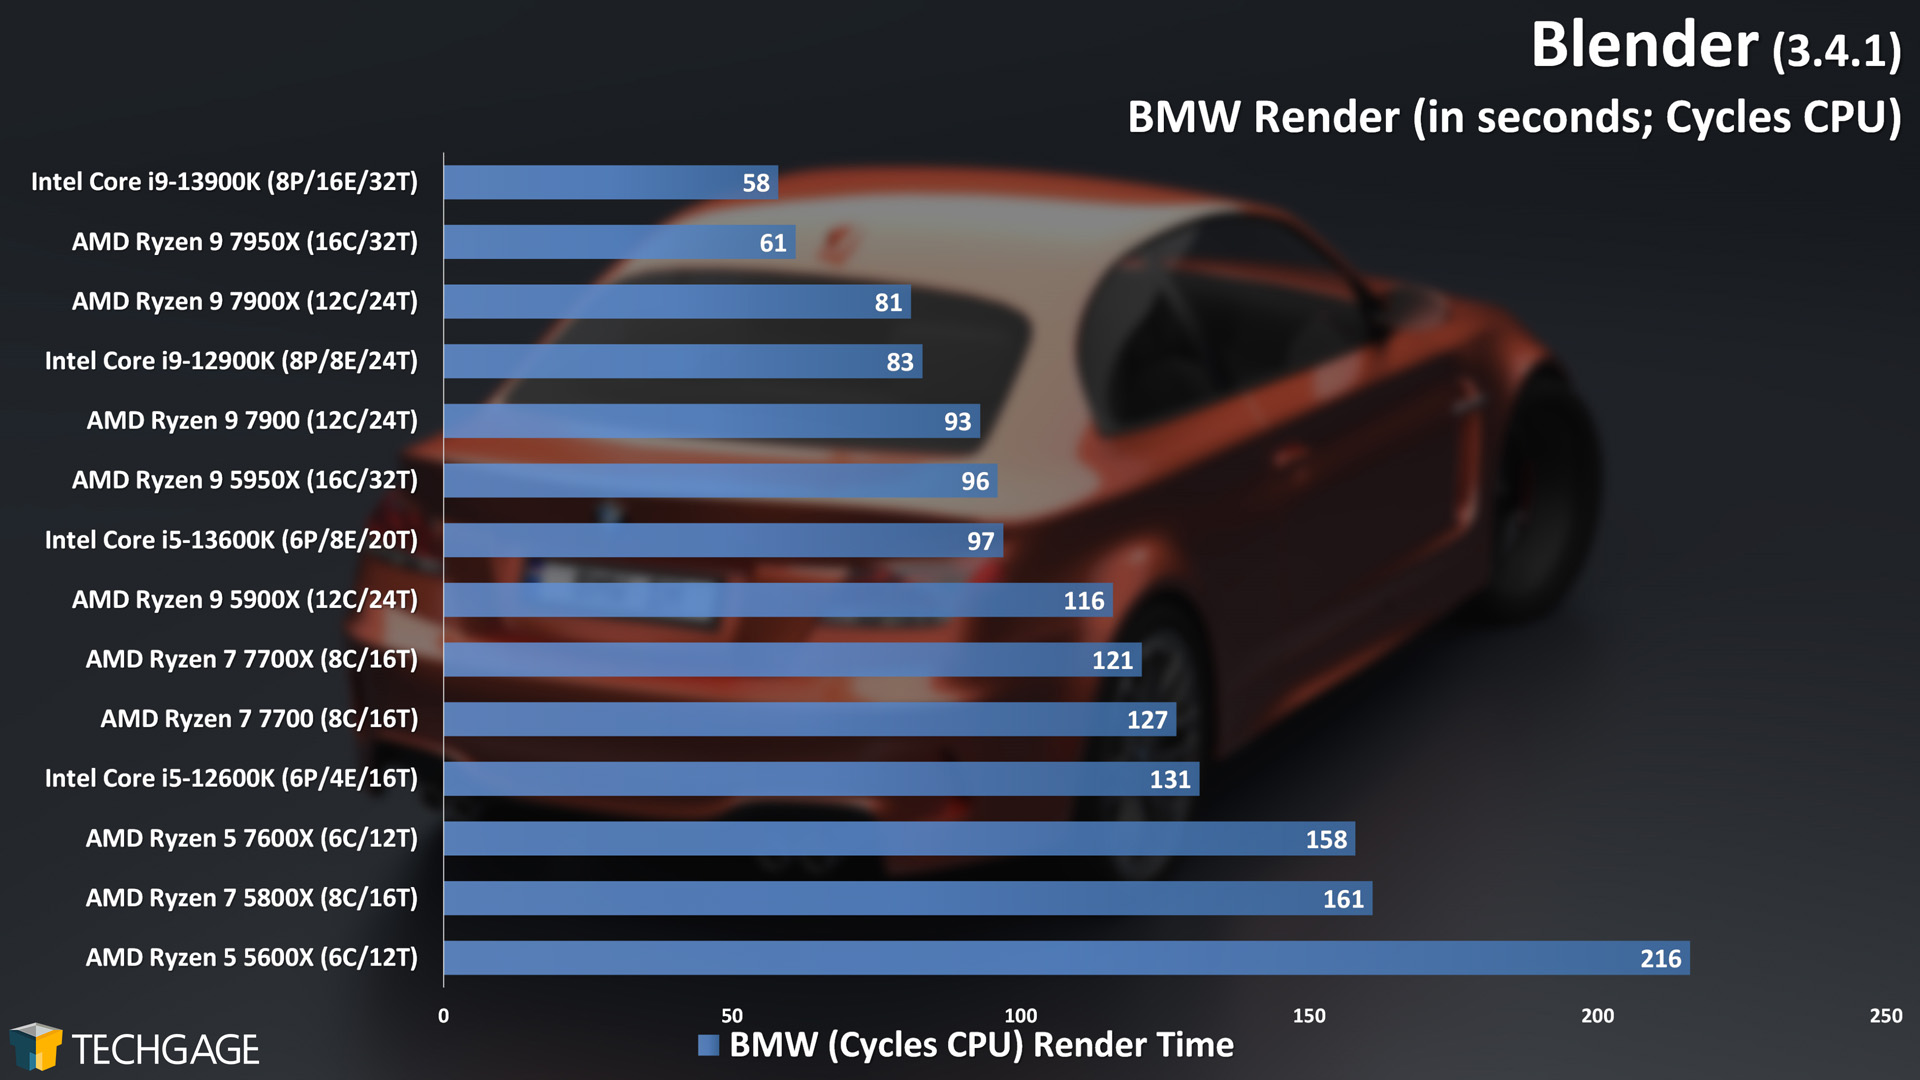 Blender - Cycles CPU Rendering Performance (BMW)